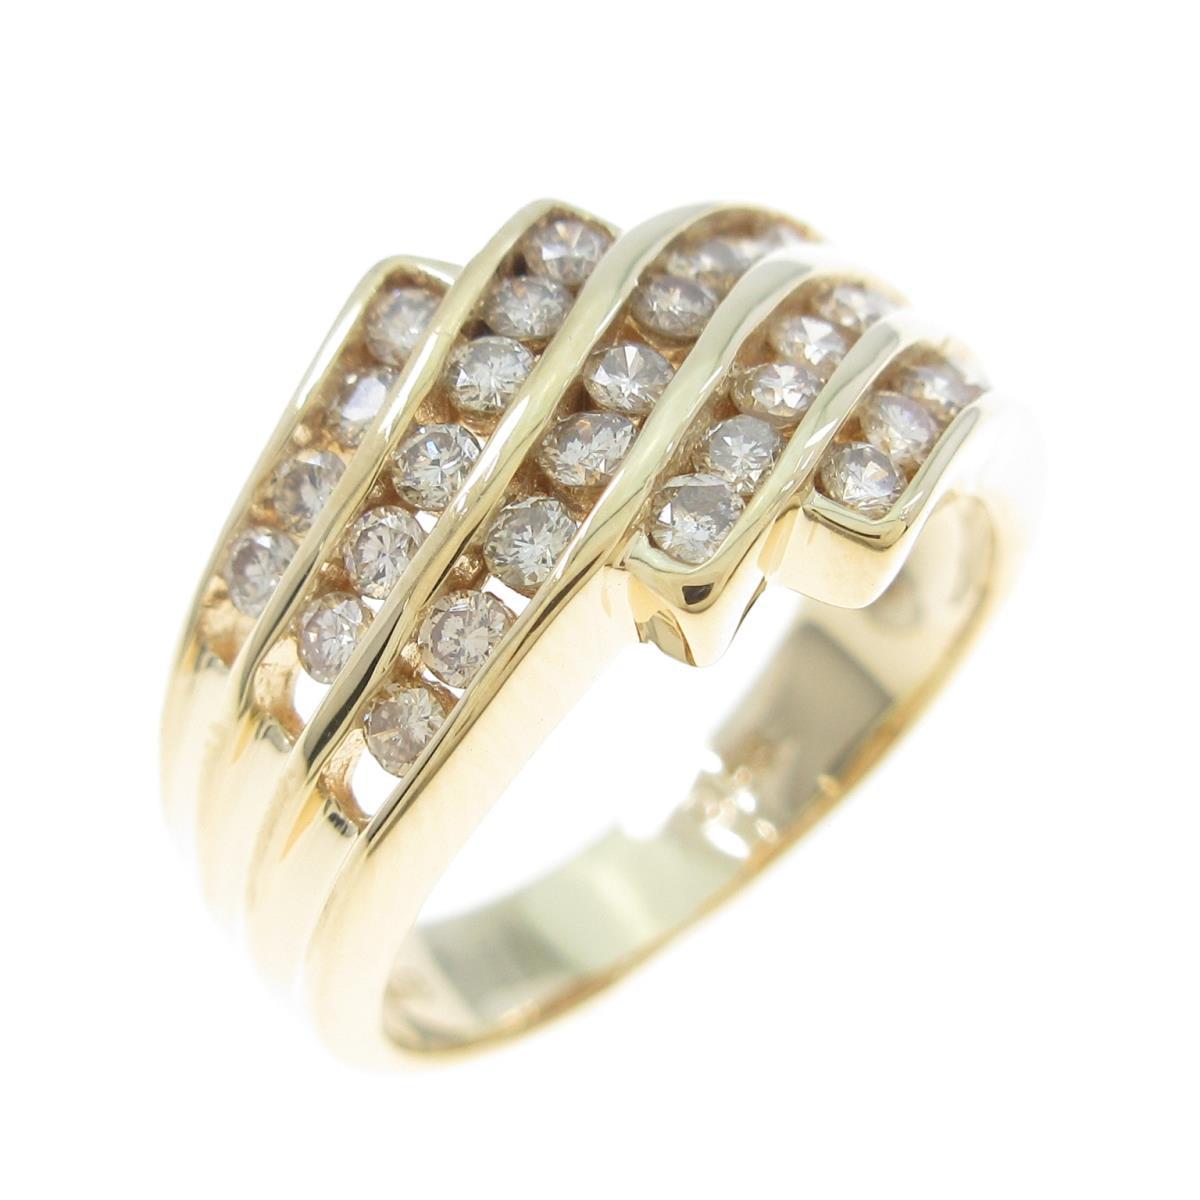 Authentic K18 Yellow Gold Diamond ring #260-003-321-7116 | eBay